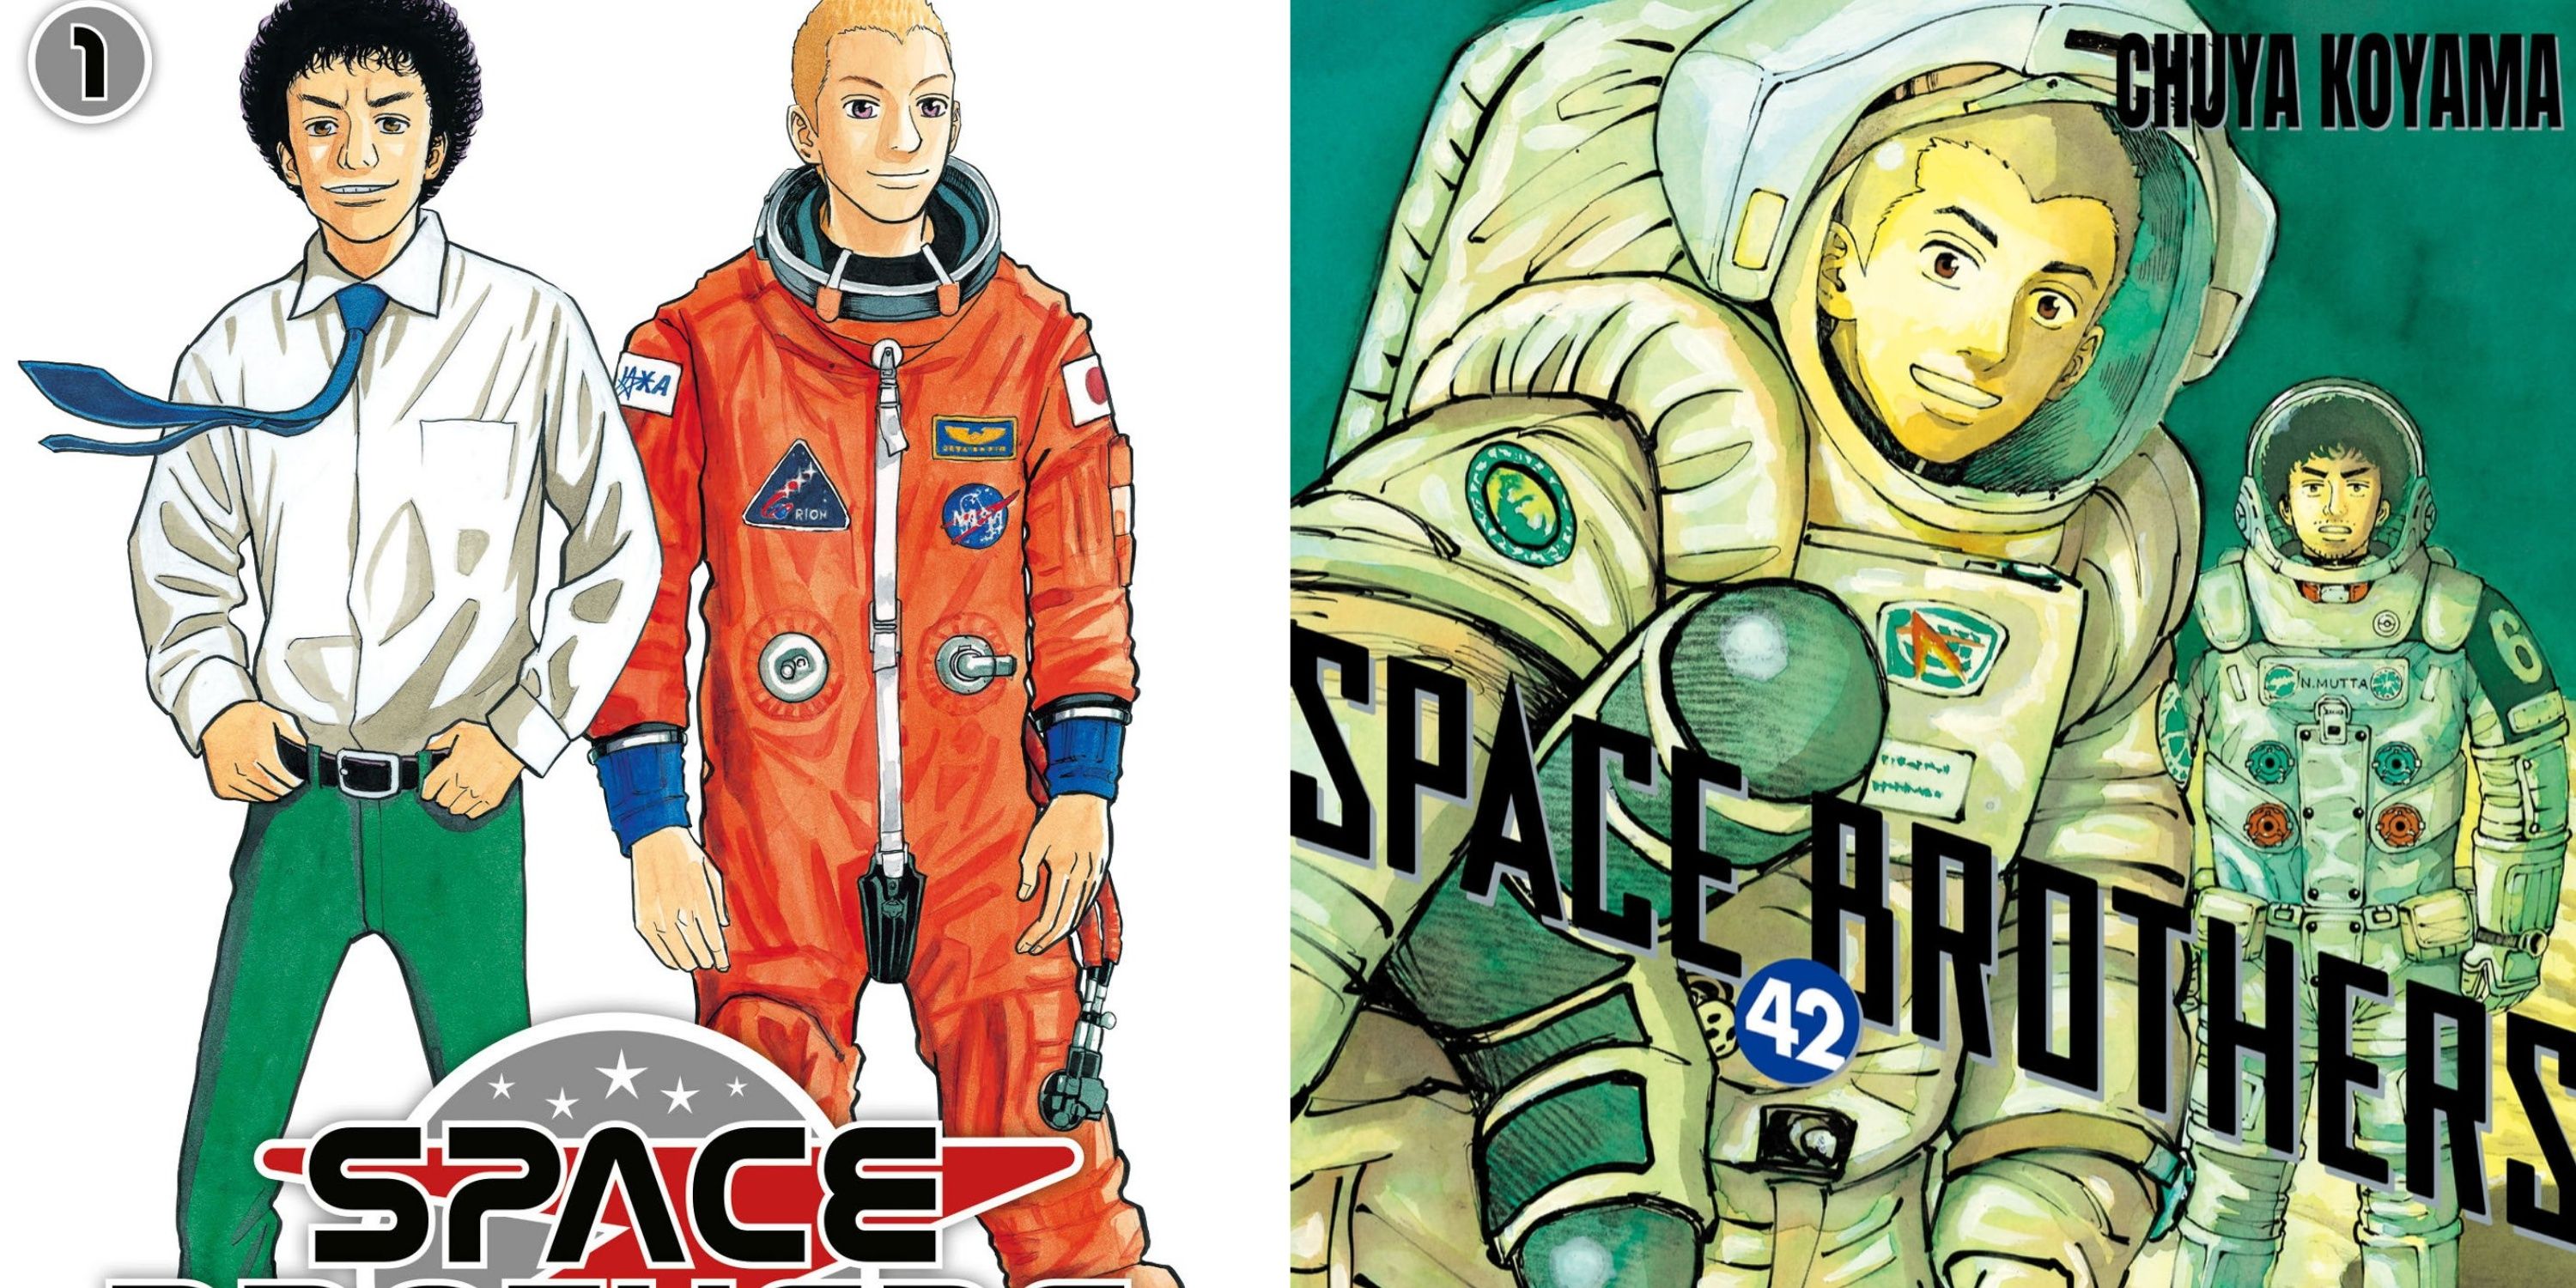 Space Brothers Manga